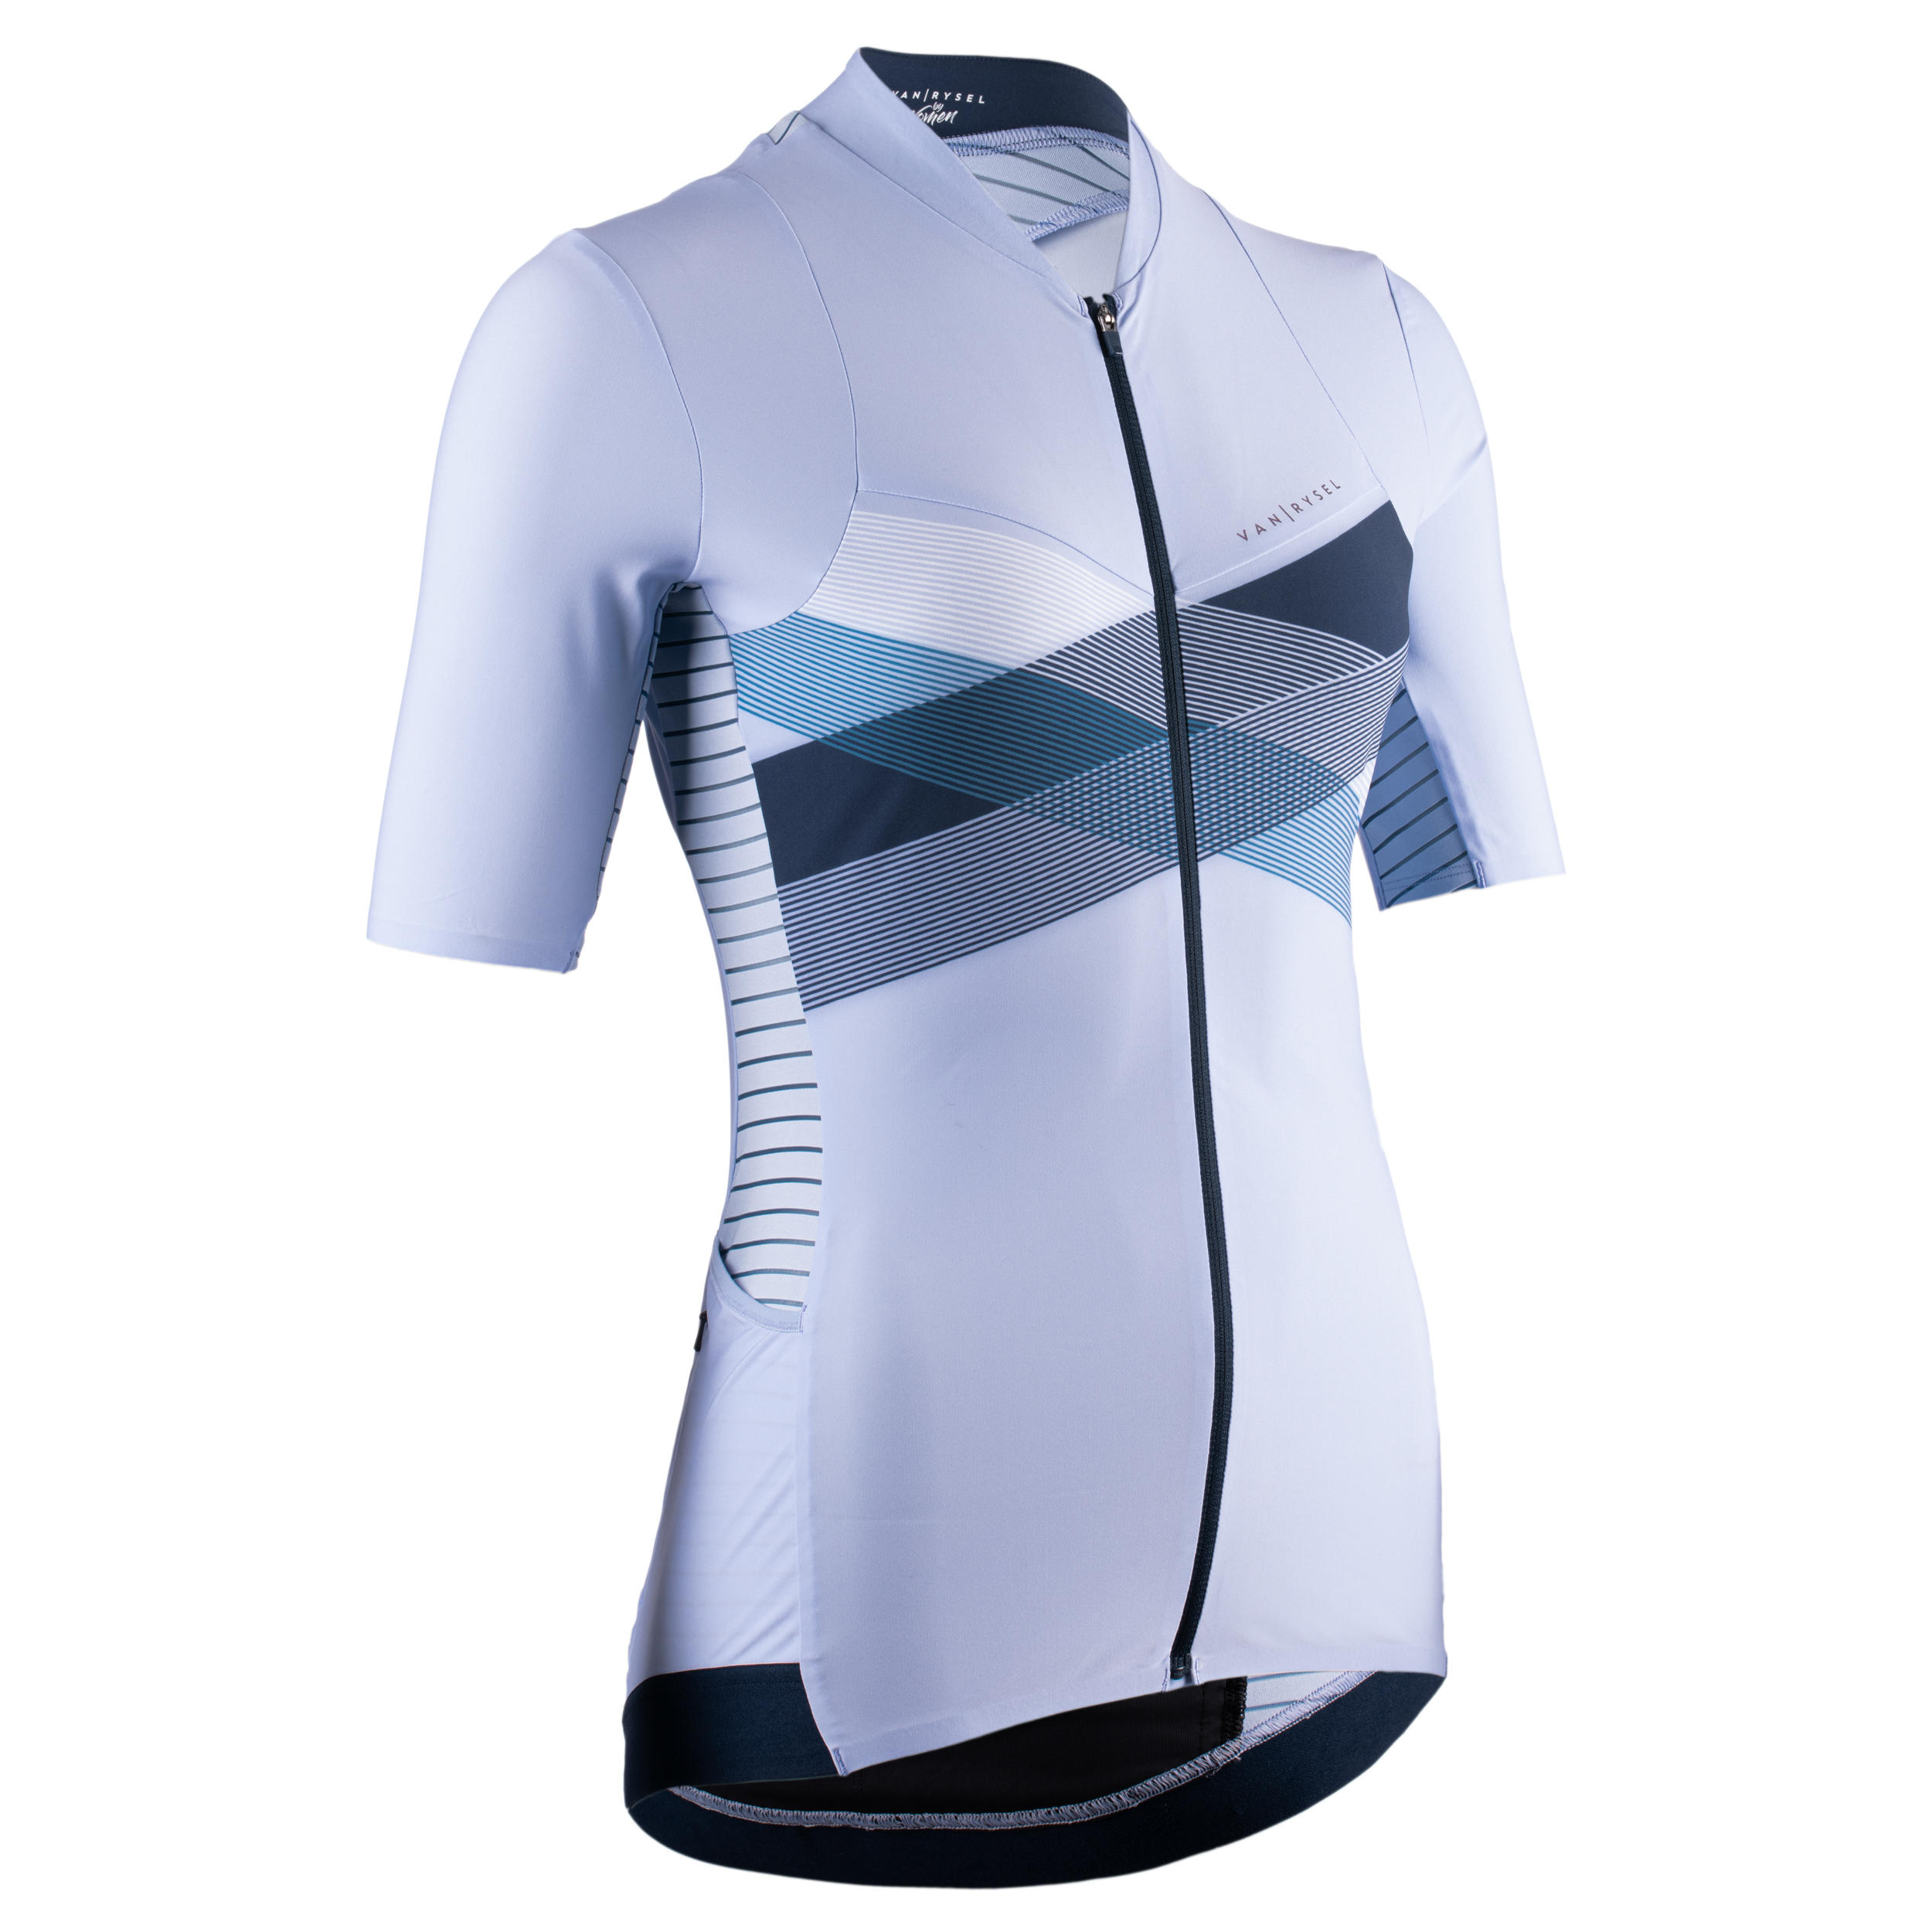 VAN RYSEL Women's Short-Sleeved Cycling Jersey RCR - Blue/Cross